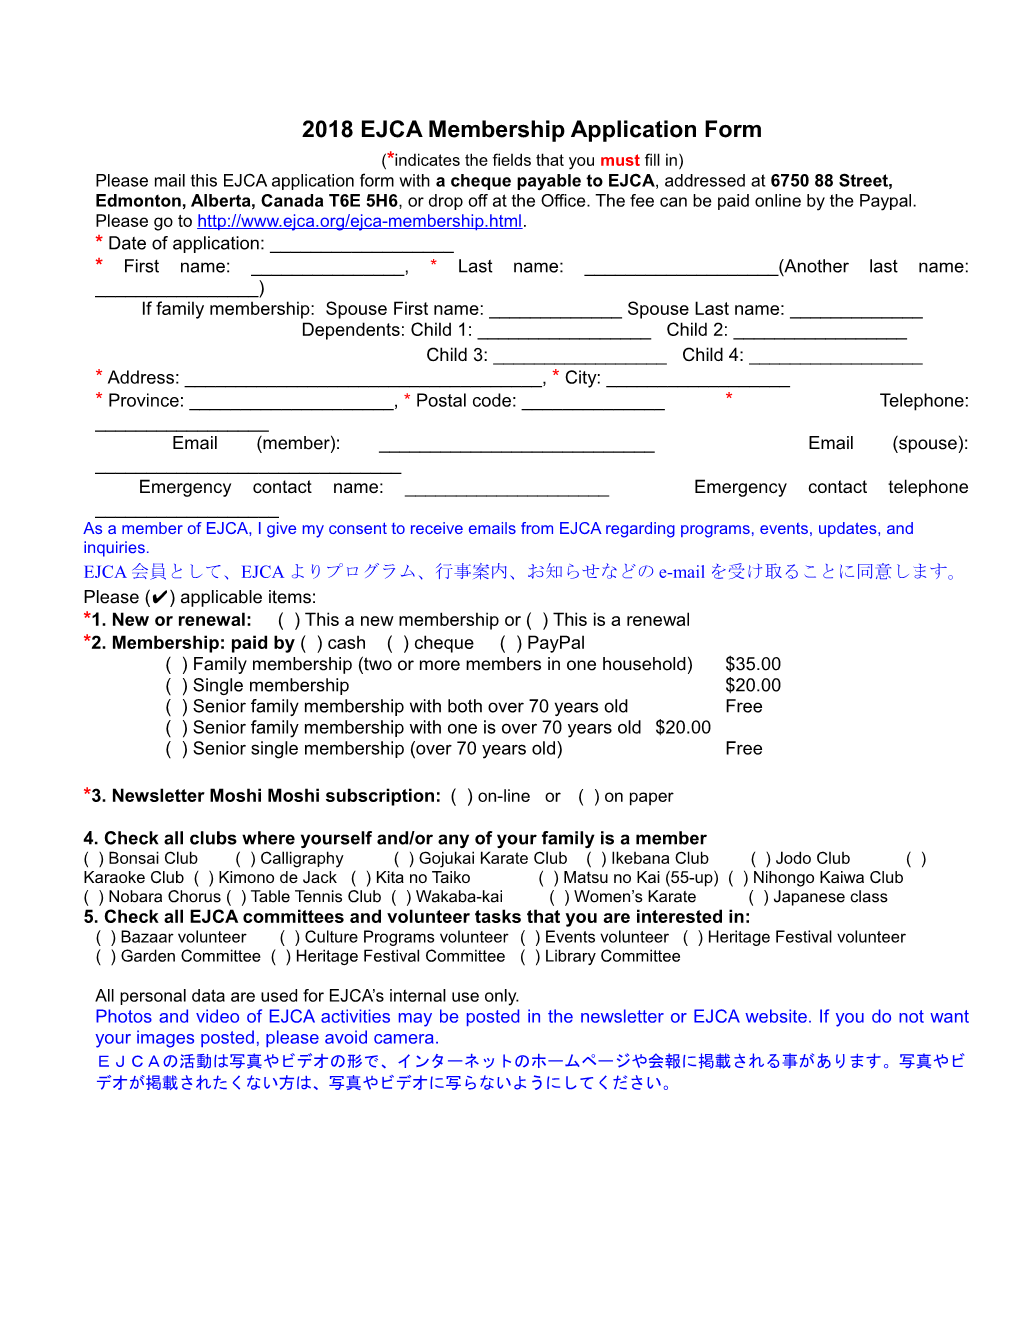 2014 EJCA Membership Application Form